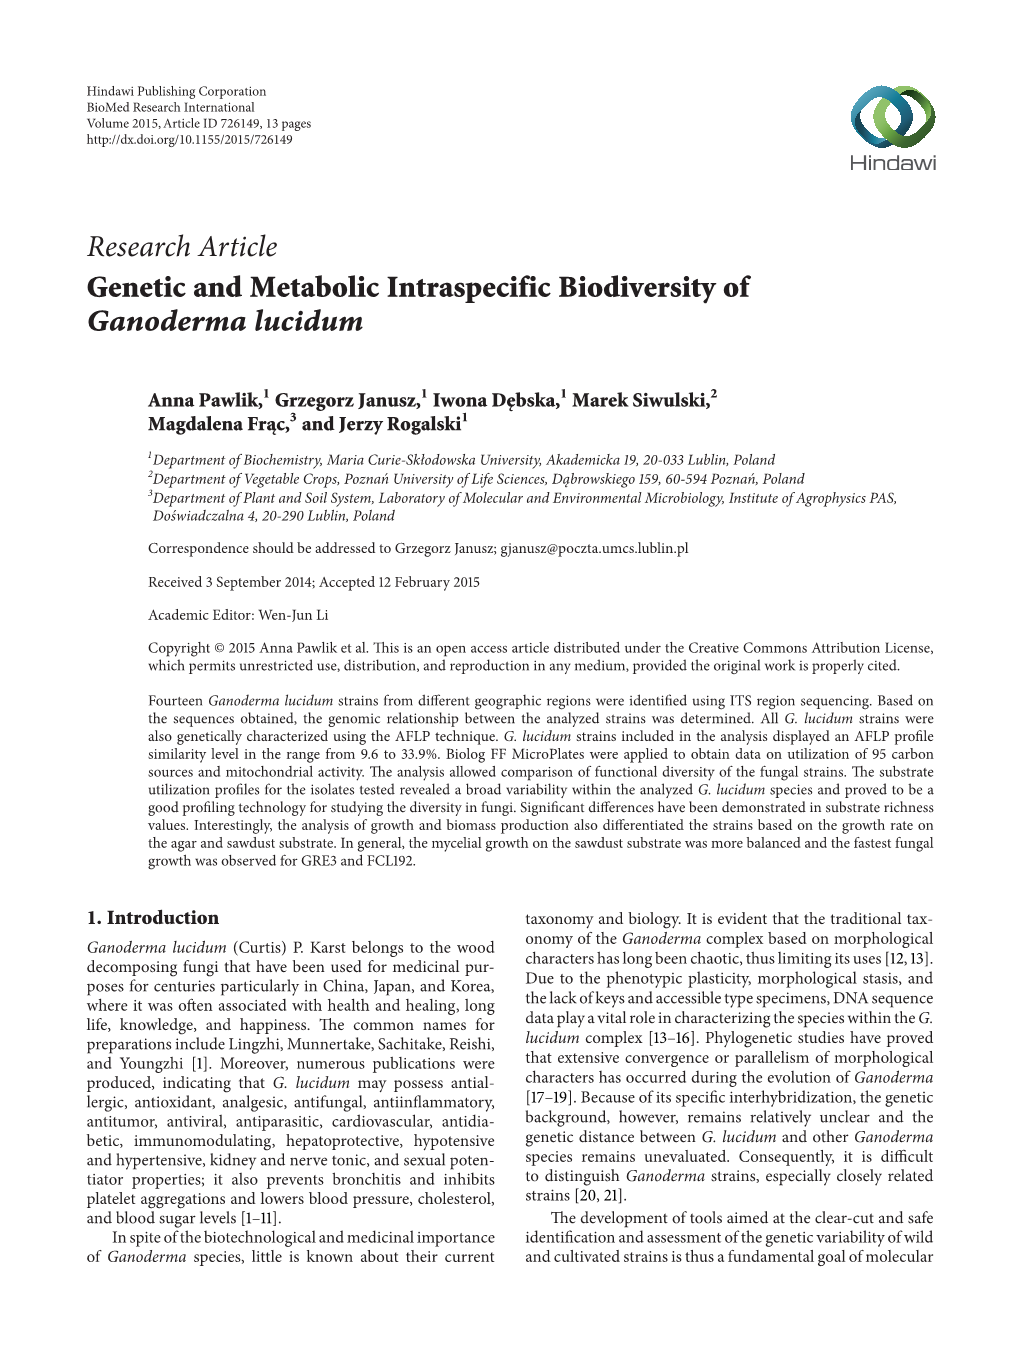 Genetic and Metabolic Intraspecific Biodiversity of Ganoderma Lucidum